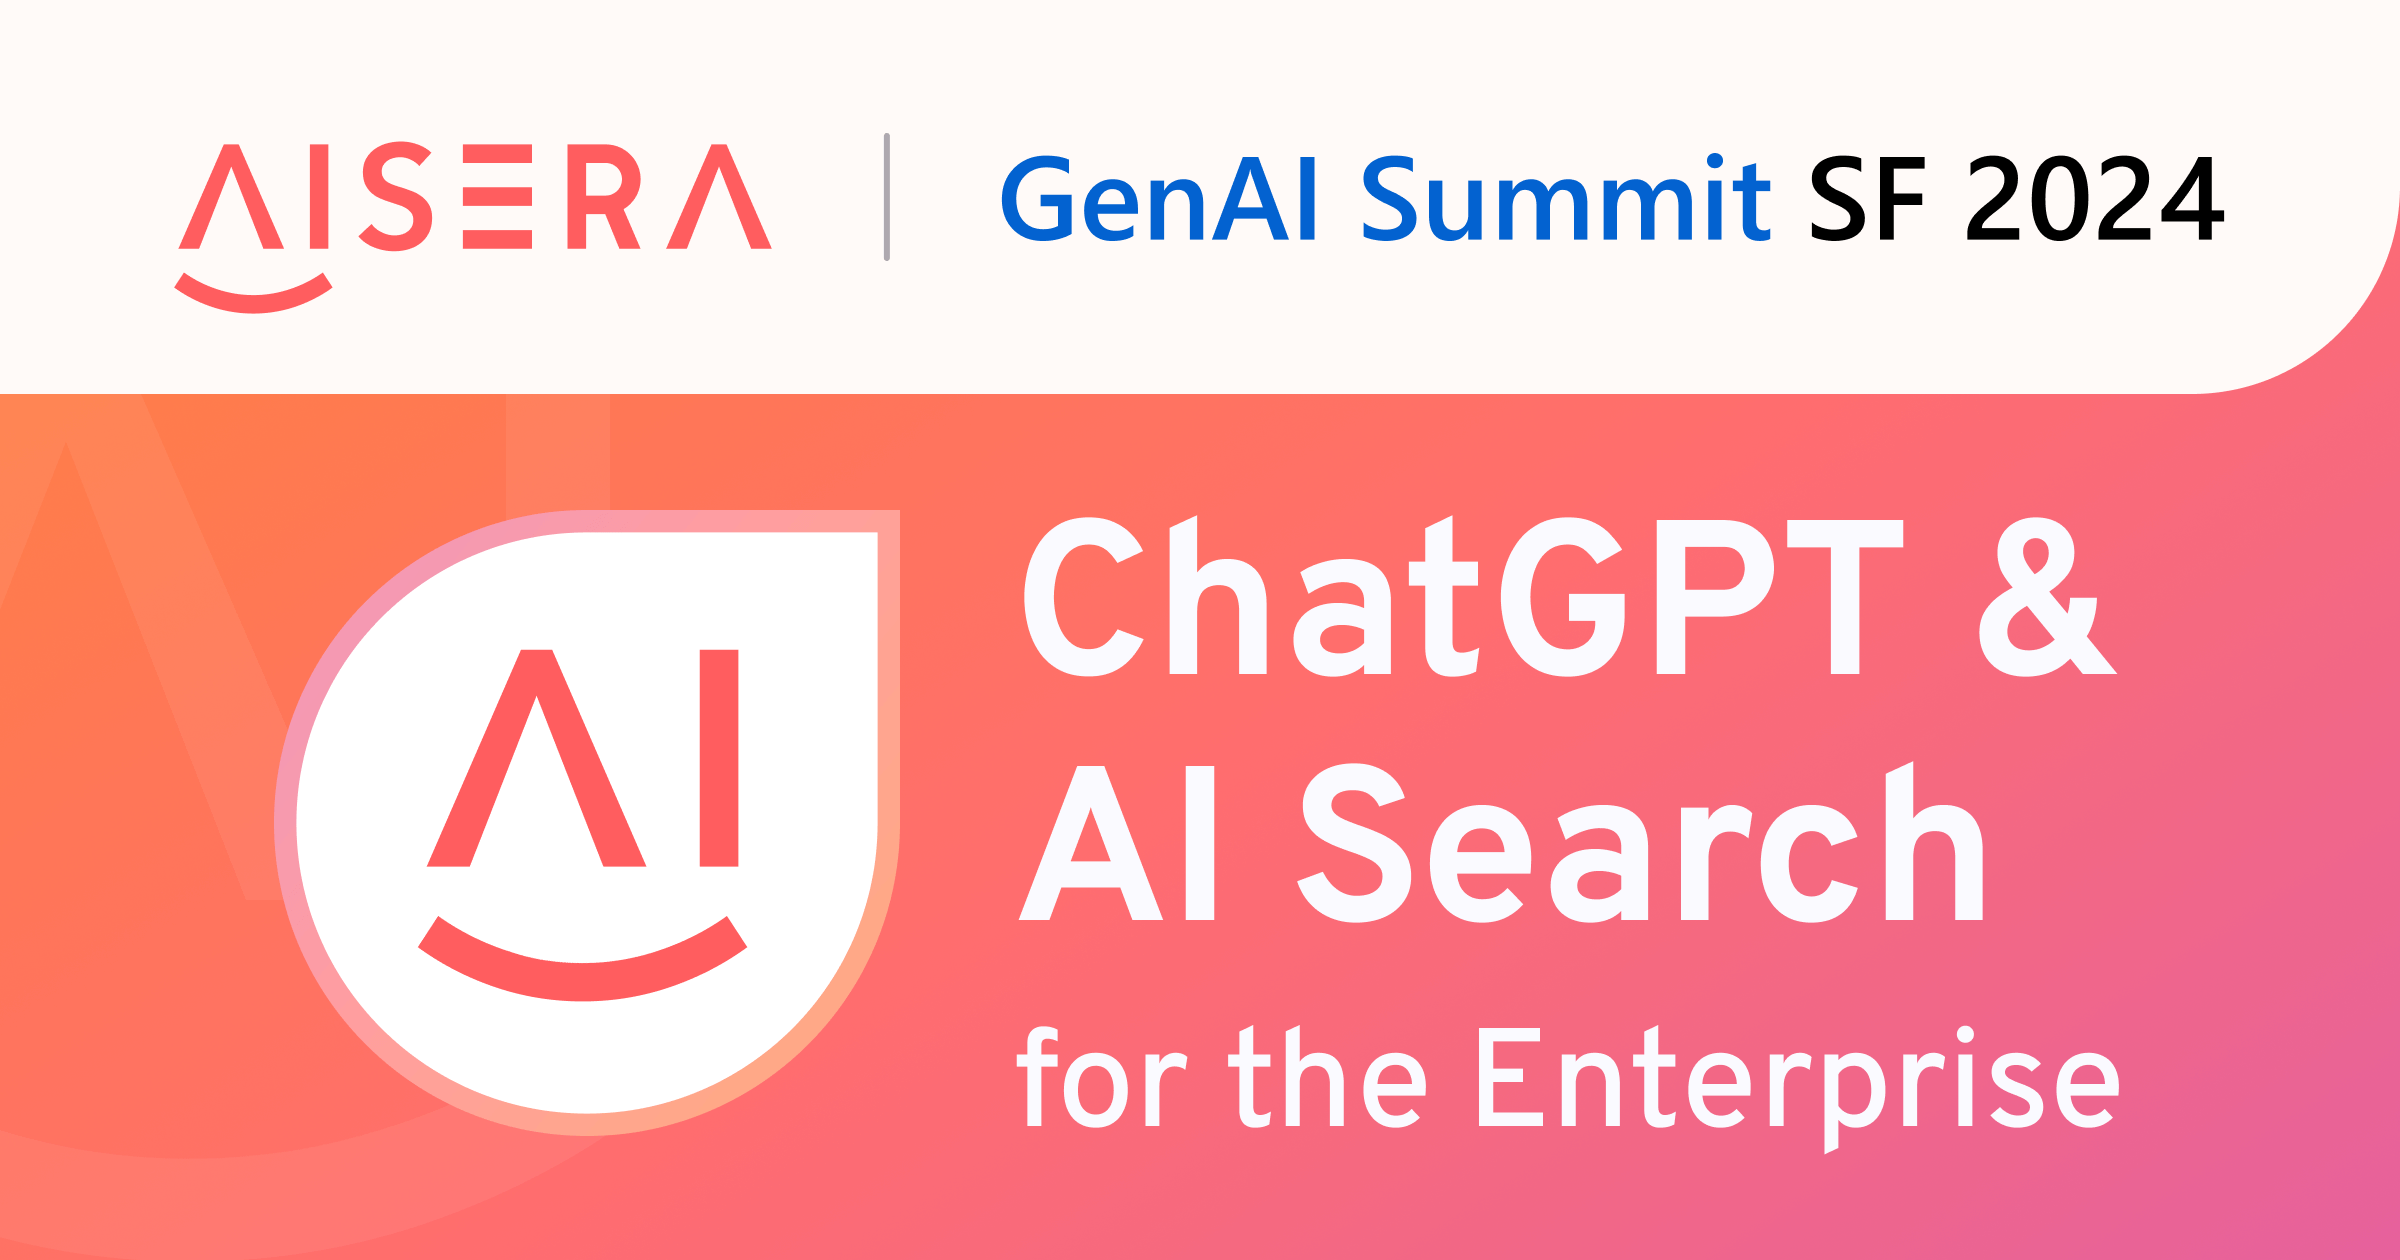 Aisera at Gen AI Summit